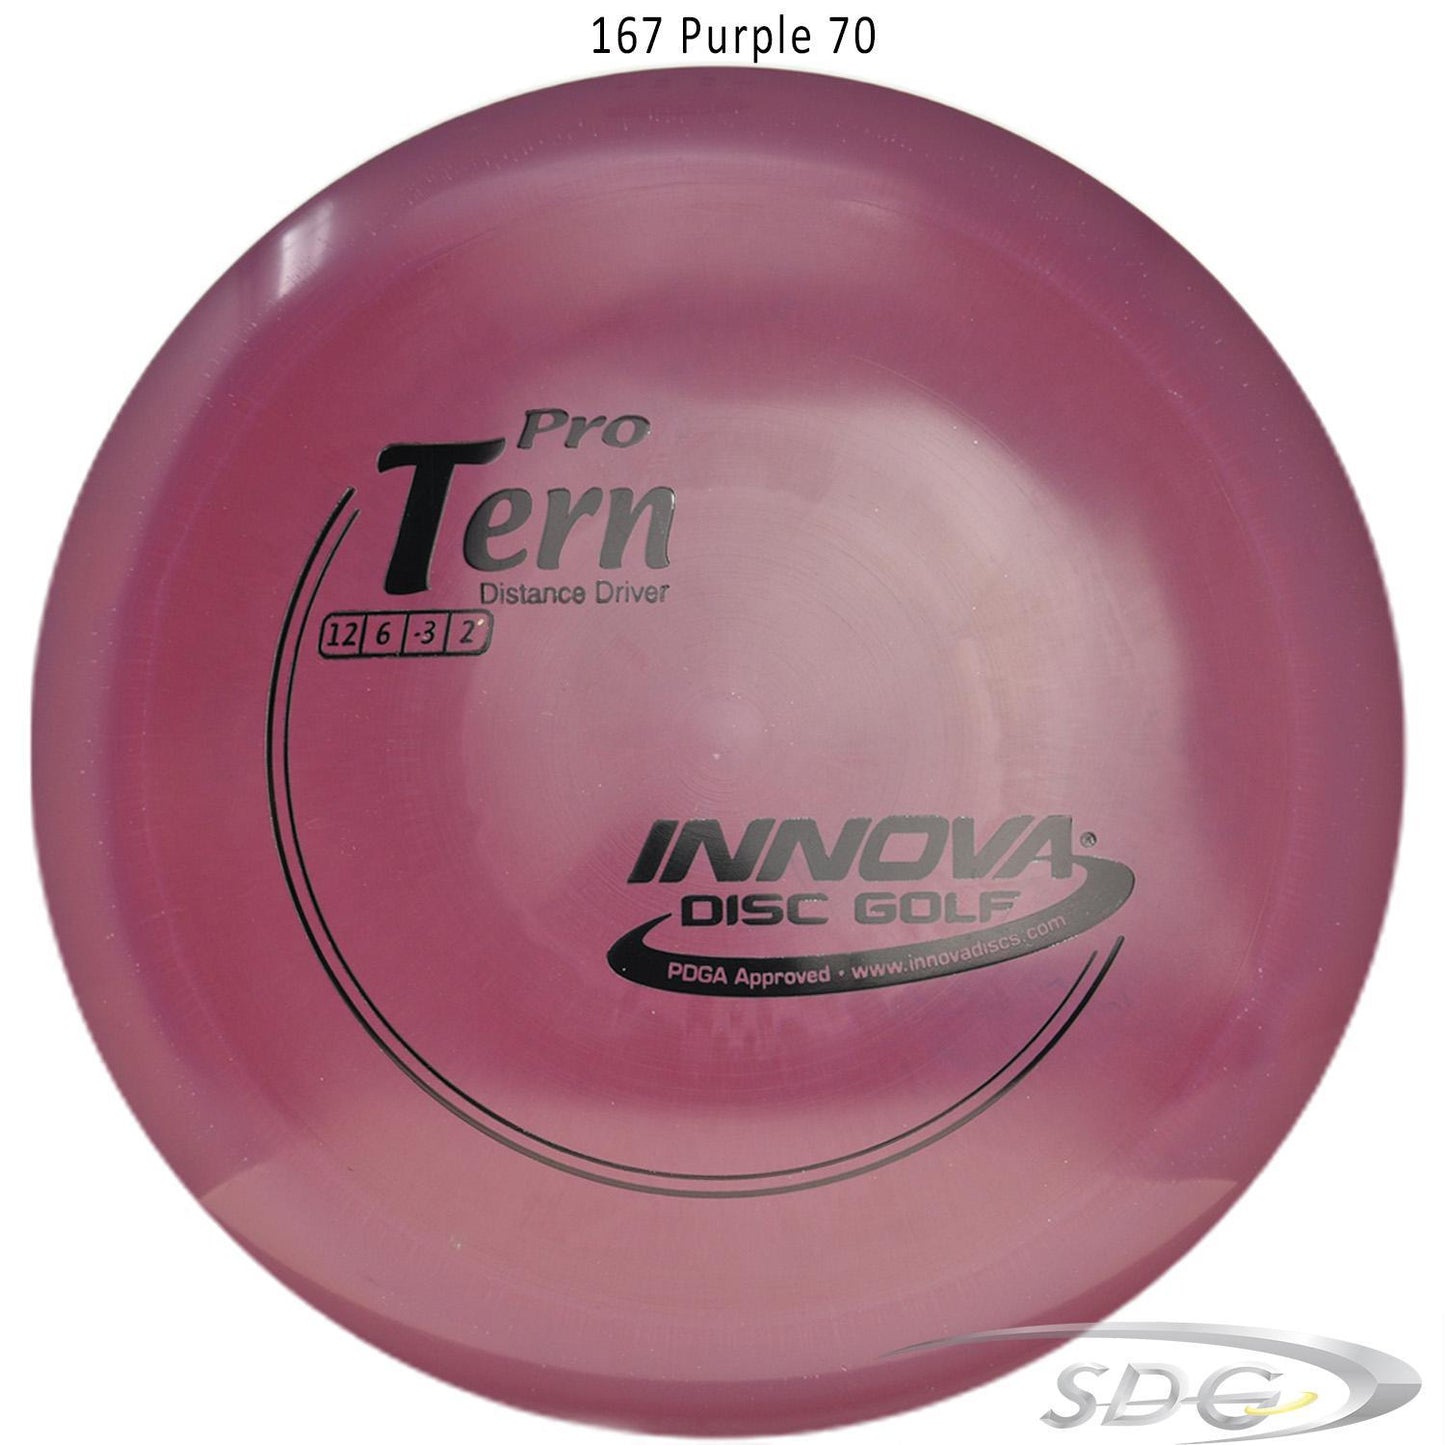 innova-pro-tern-disc-golf-distance-driver 167 Purple 70 